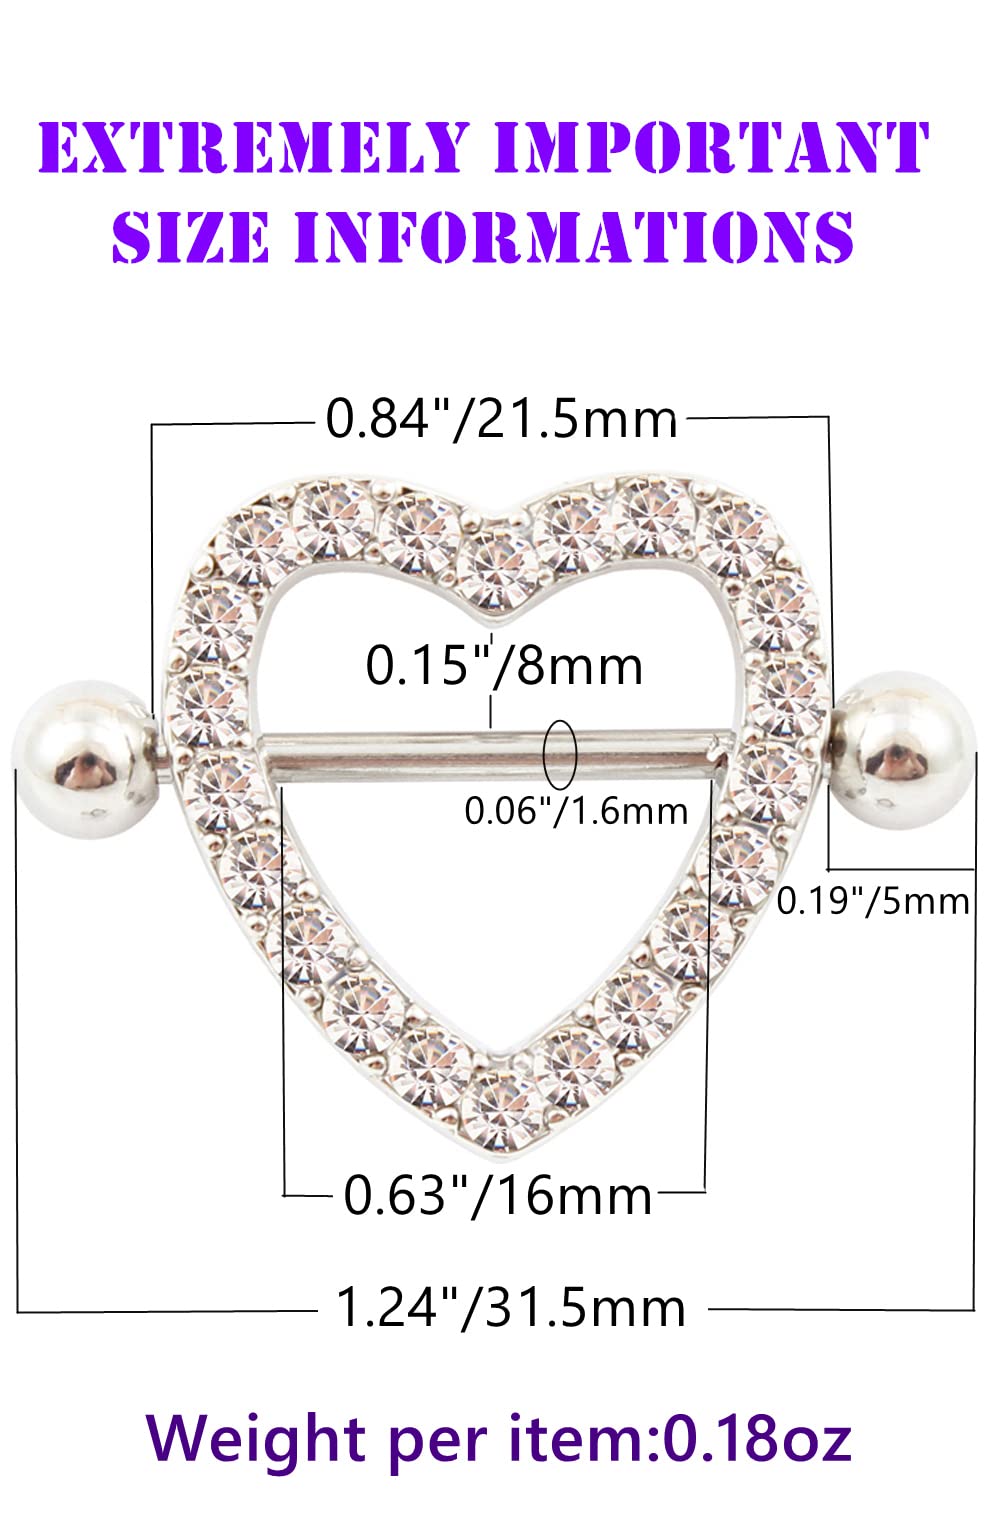 IrbingNii Stainless Steel Heart Nipple Rings Nipple Piercings for Women Girls Body Piercing Jewelry 14G